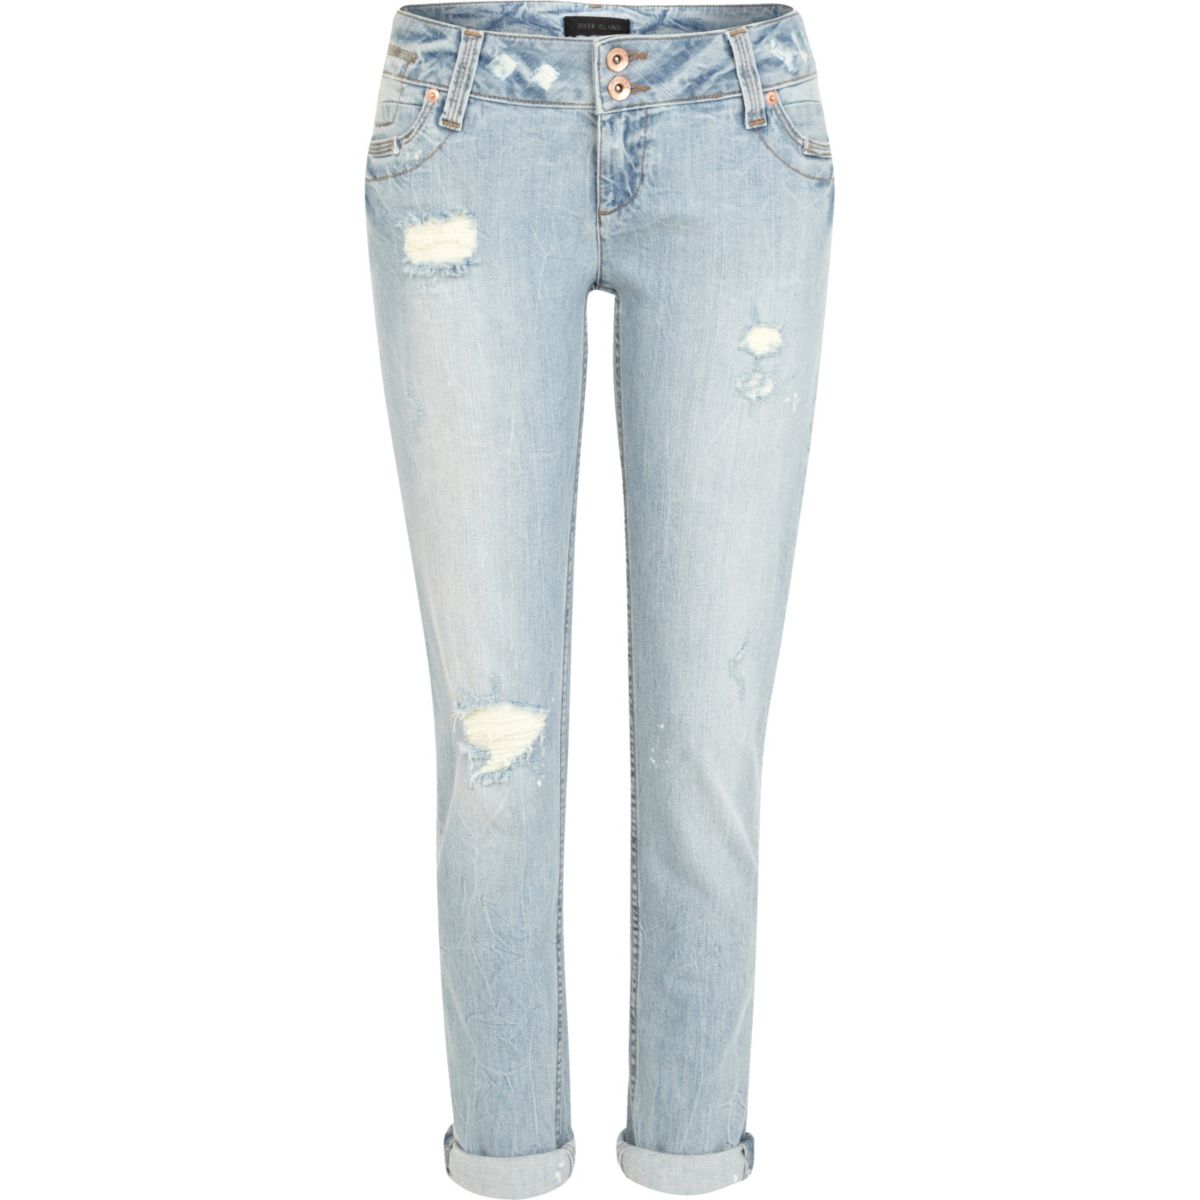 Light wash ripped Matilda skinny jeans - Jeans - Sale - women